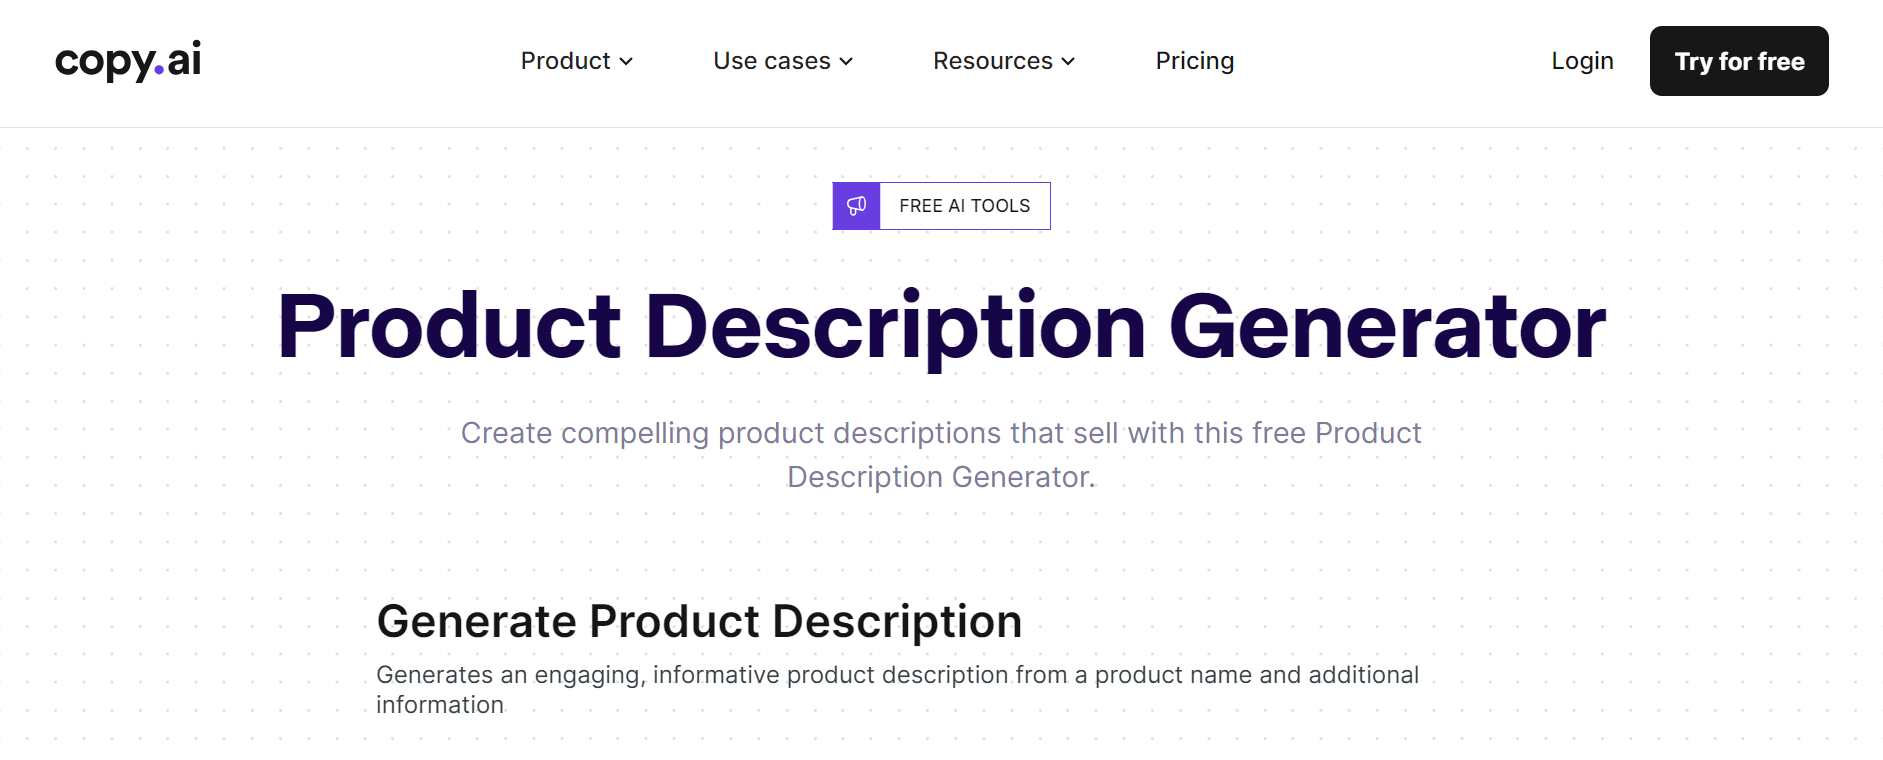 ai product description generator